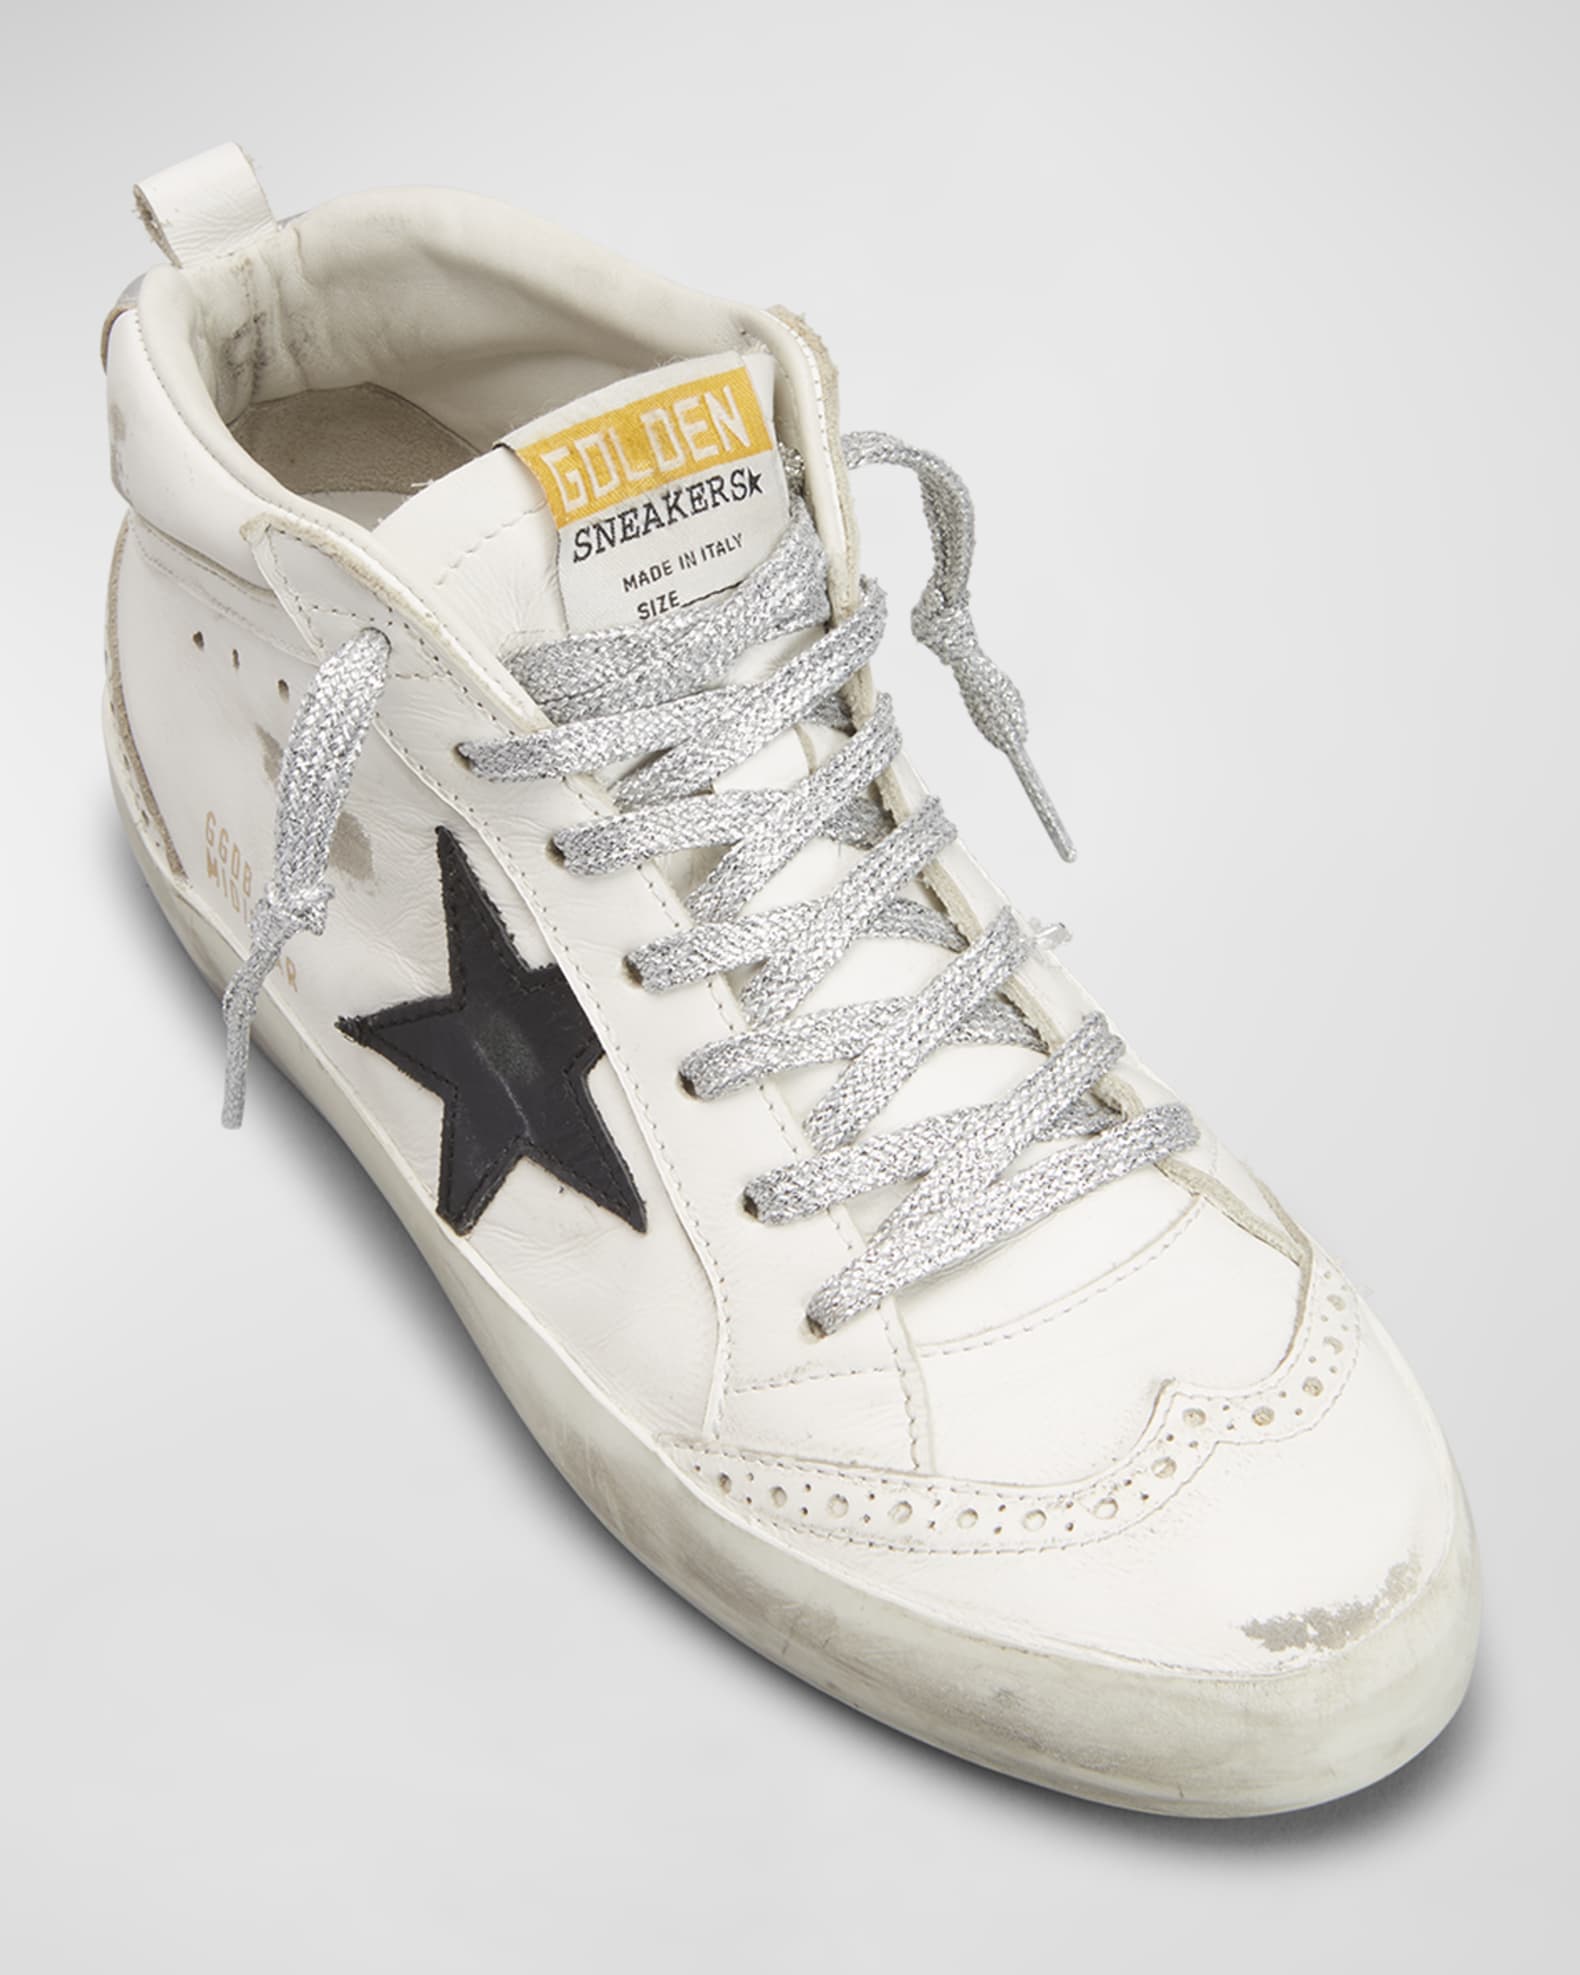 Golden Goose Mid Star Leather Wing-Tip Sneakers | Neiman Marcus